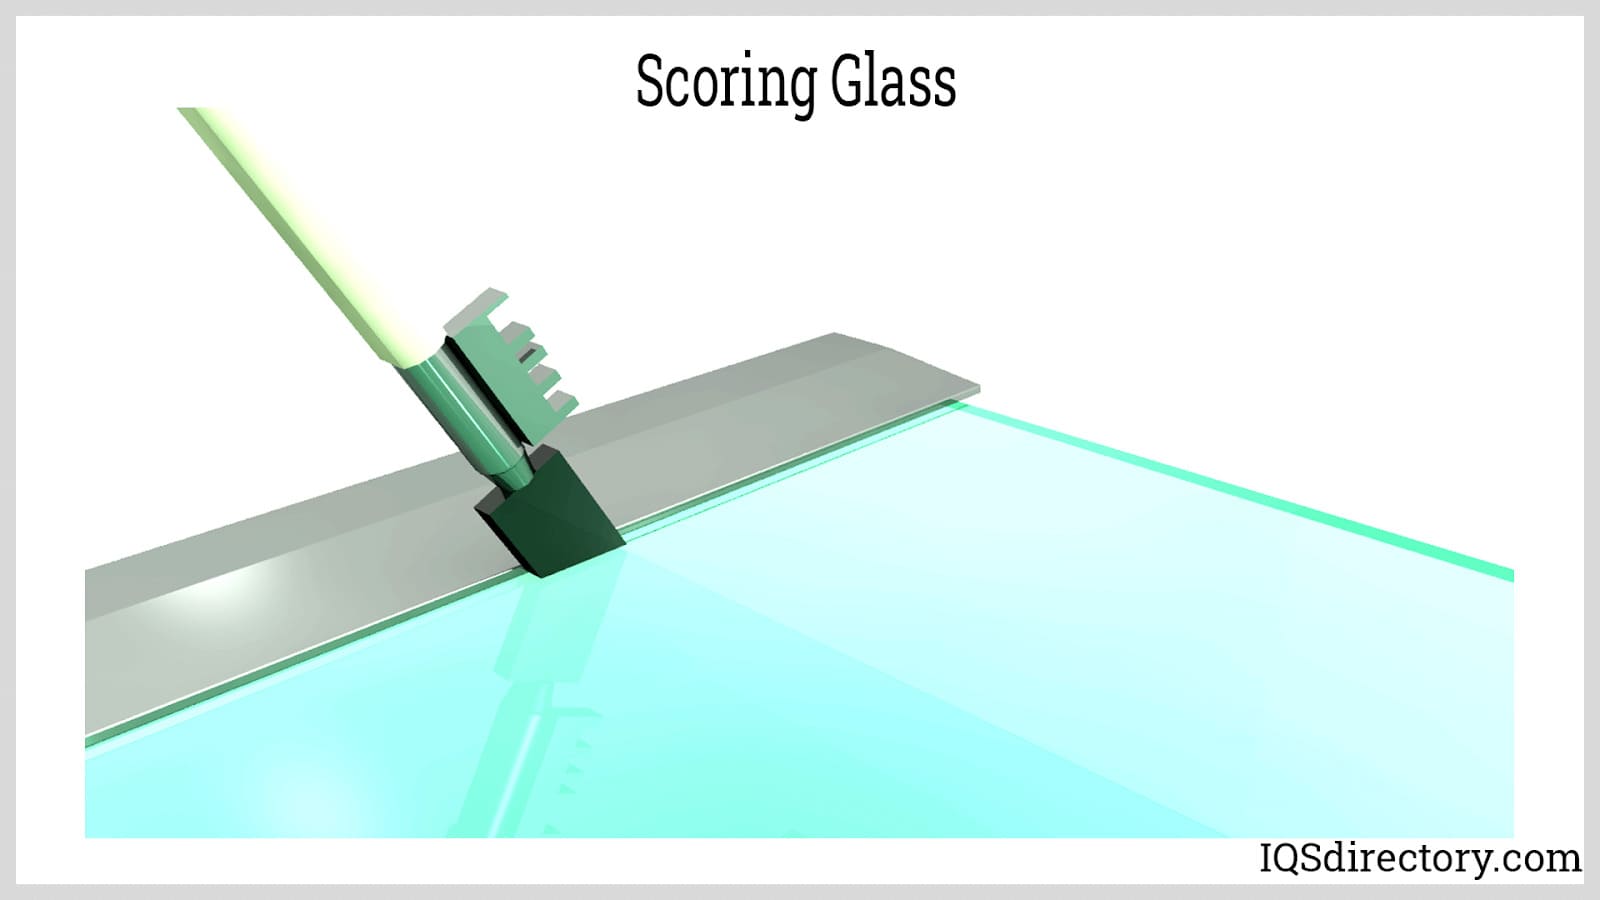 Scoring Glass